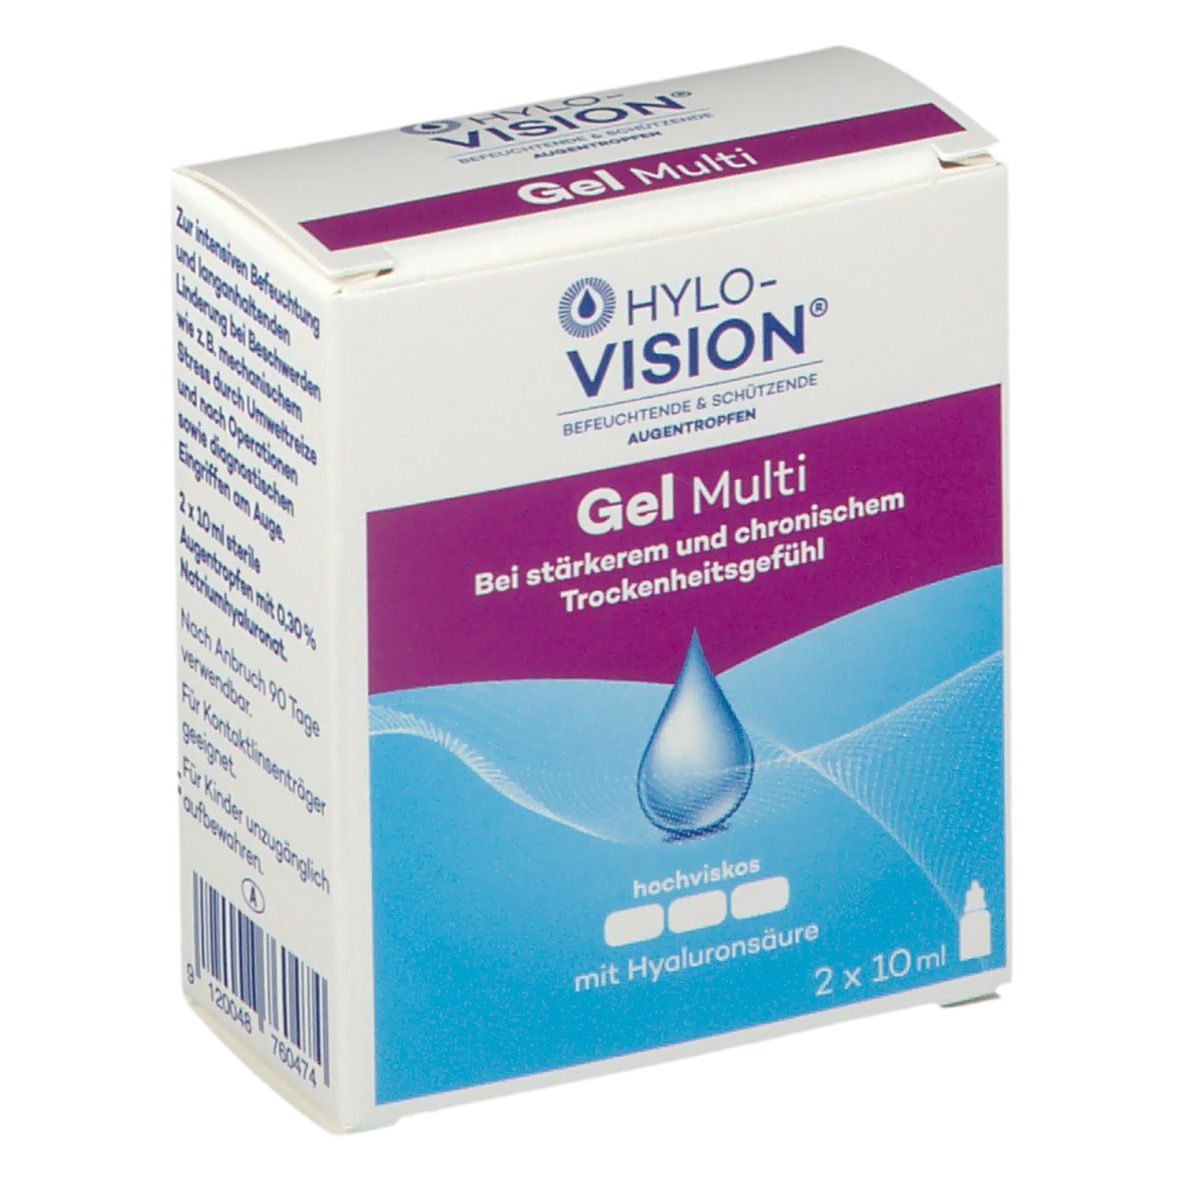 Hylo-Vision® Gel multi